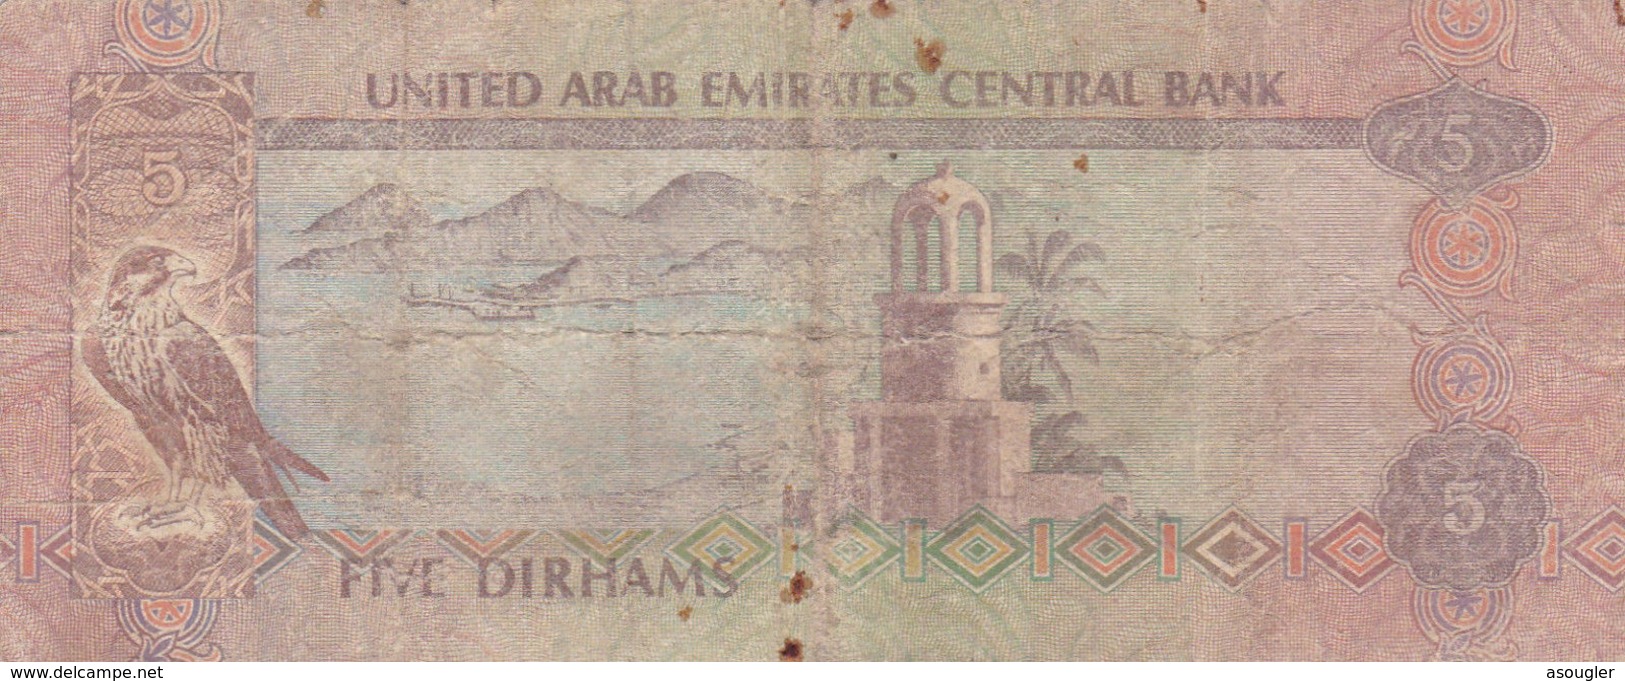 UNITED ARAB EMIRATES UAE 5 DIRHAMS ND 1982 P-7a G "free Shipping Via Regular Air Mail (buyer Risk)" - Ver. Arab. Emirate